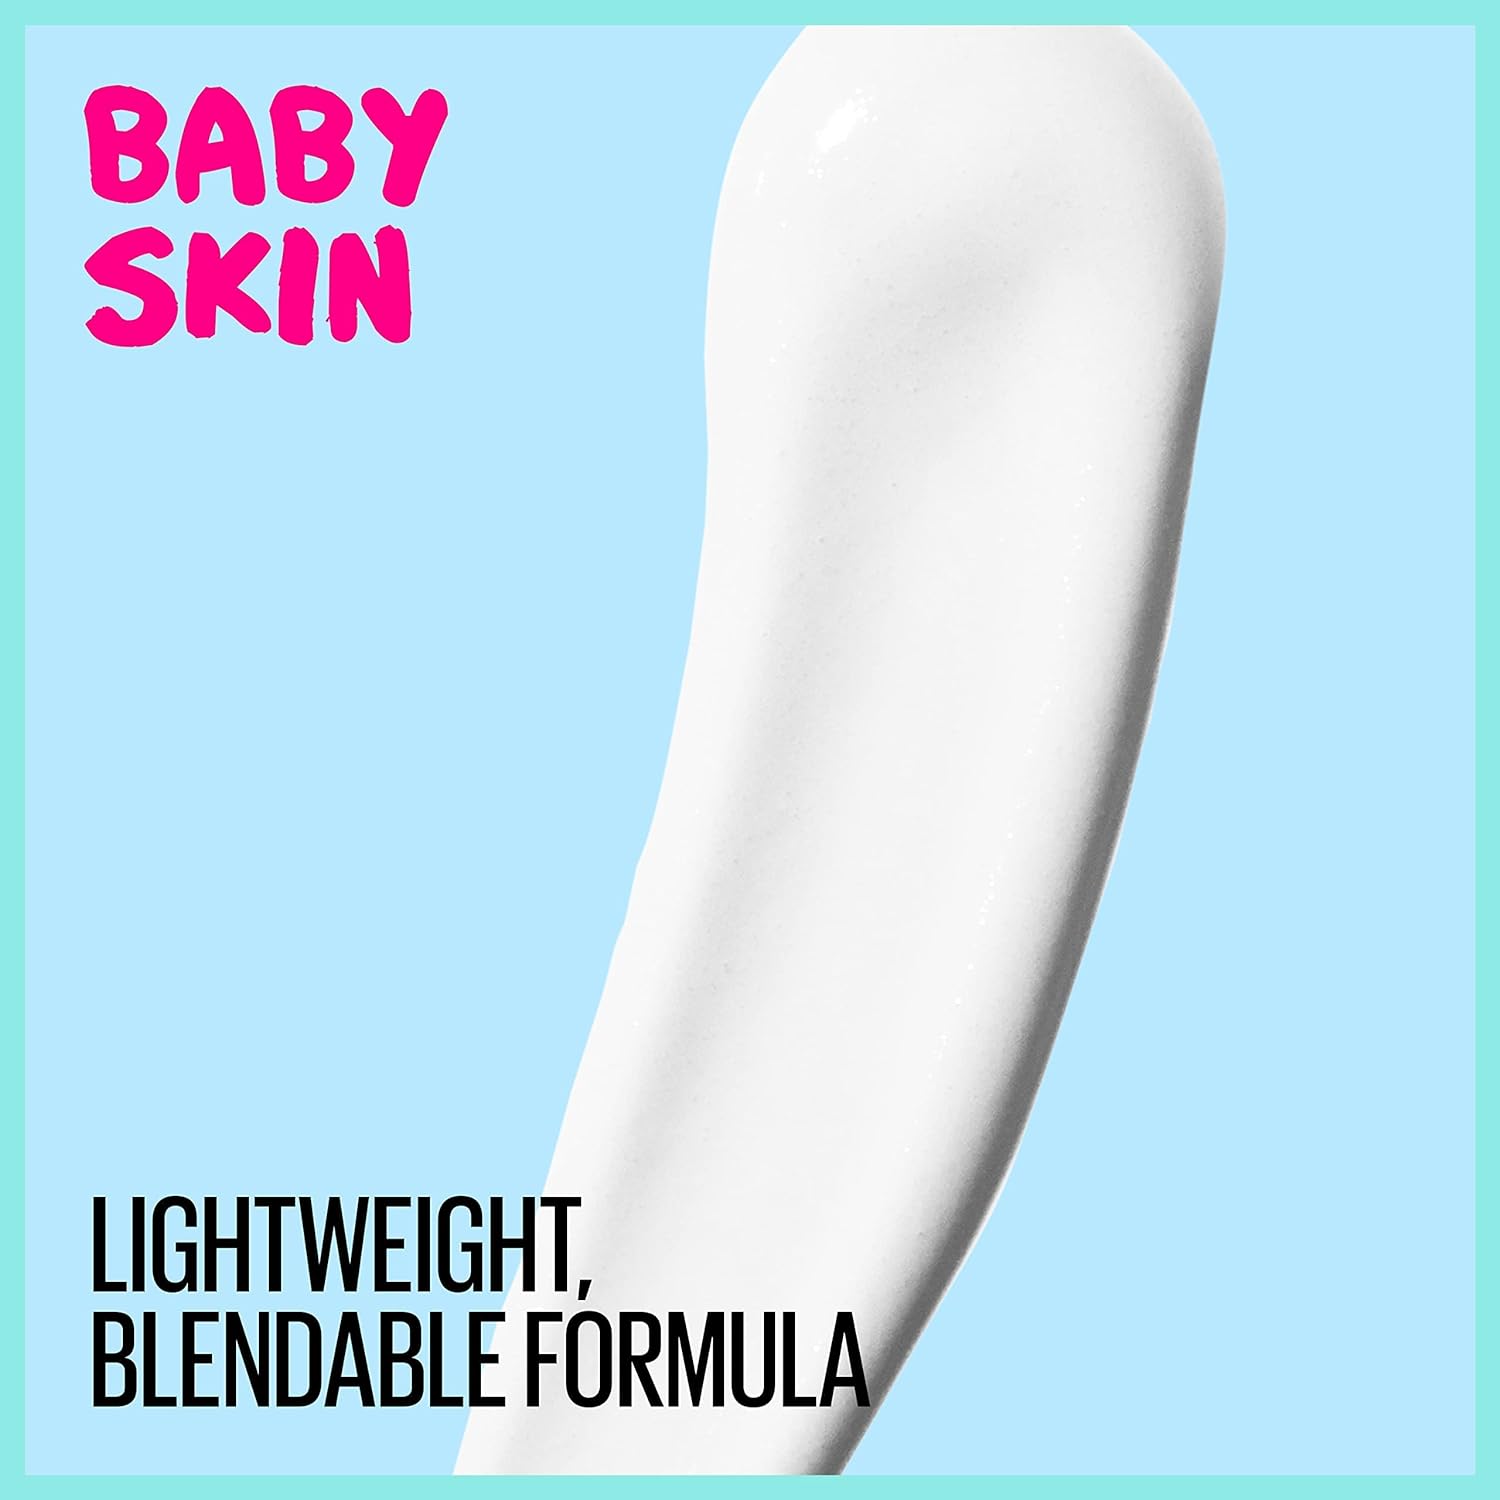 Maybelline New York Baby Skin Instant Pore Eraser Foundation Primer, Transparent, 22 Ml